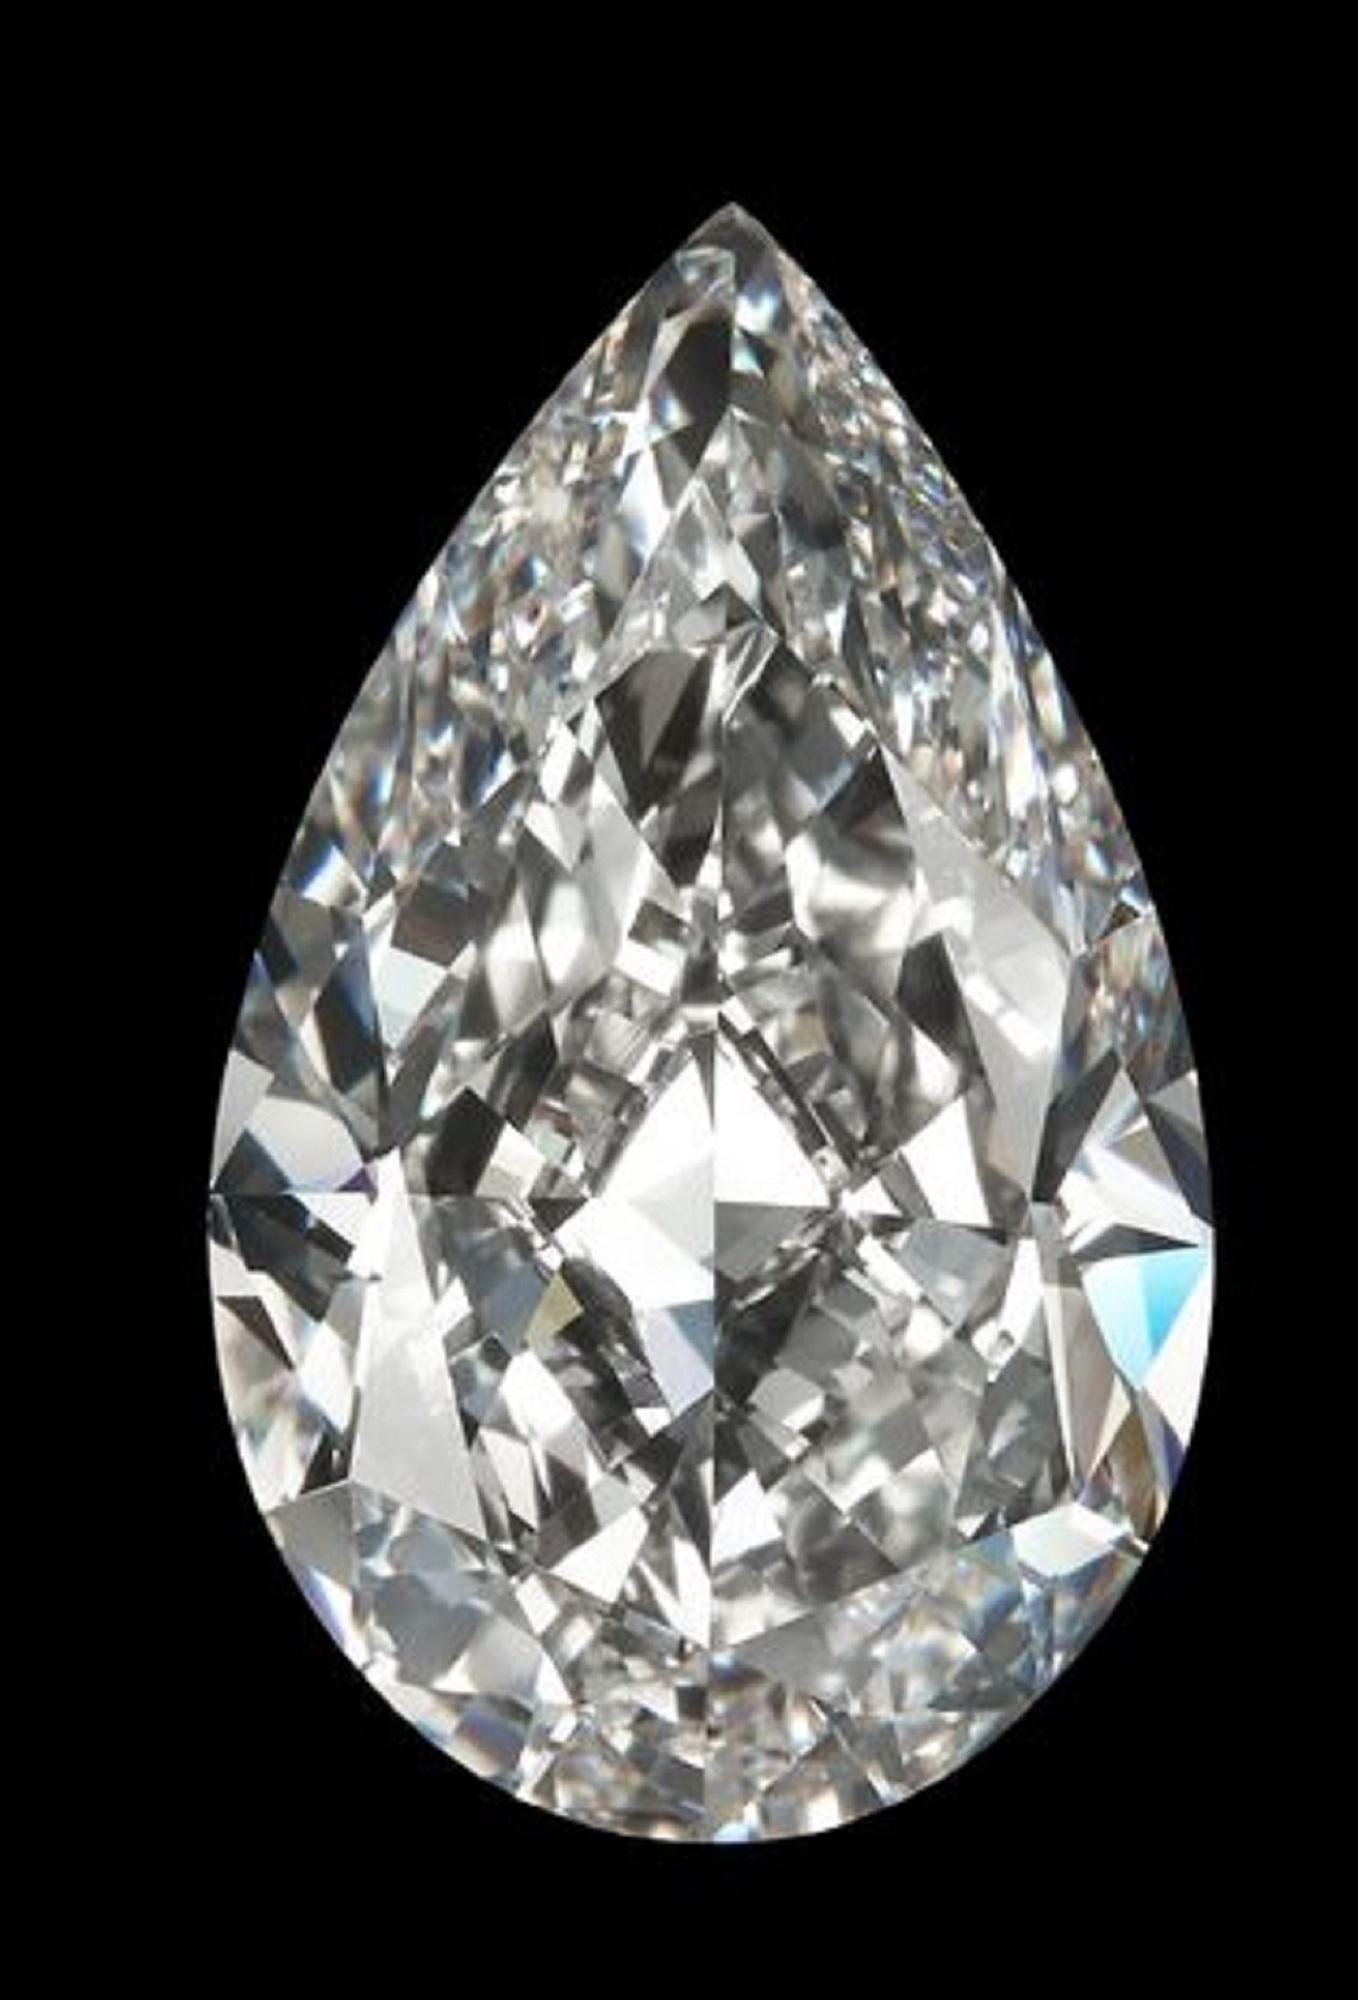 flawless diamond